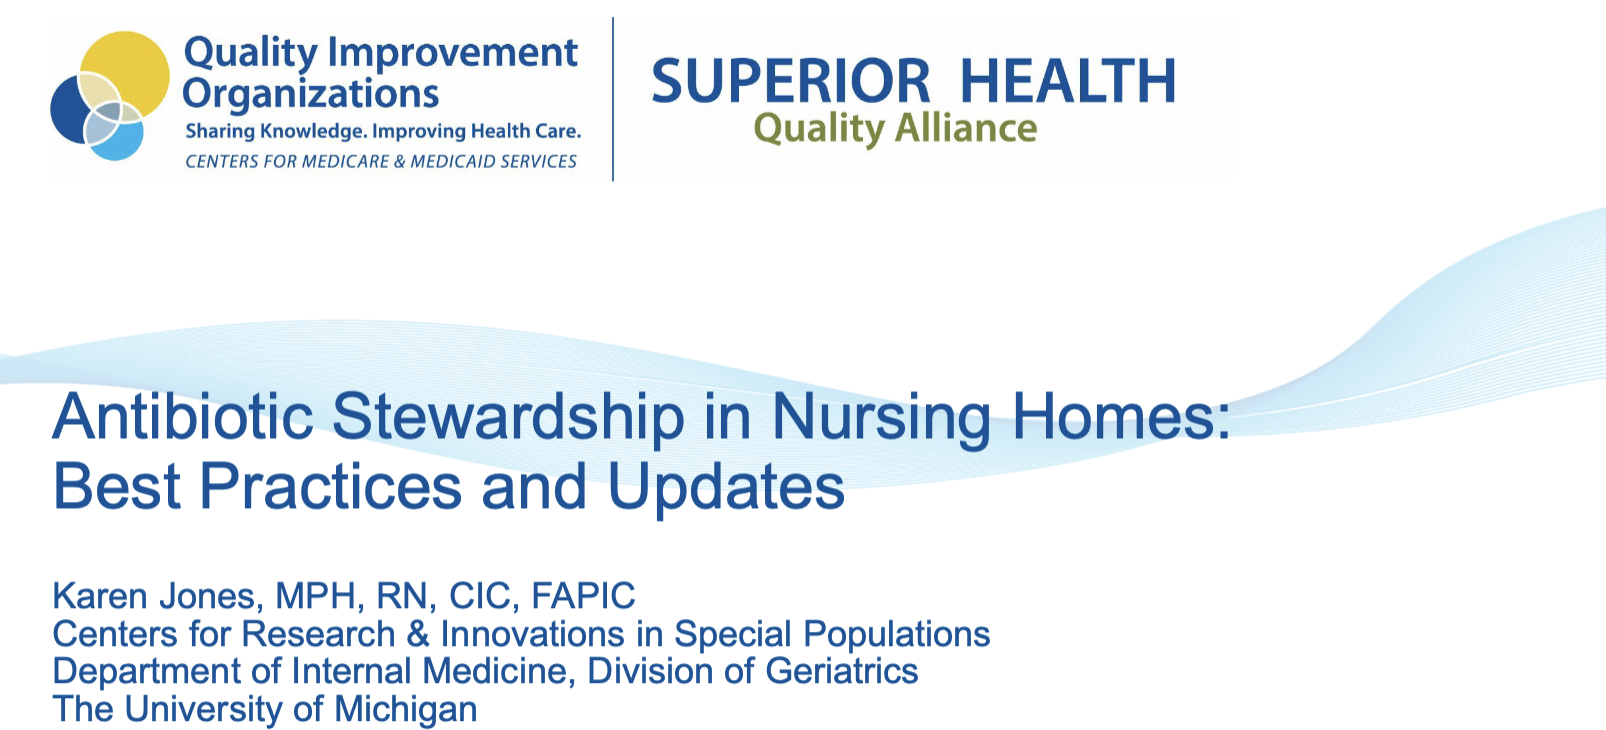 Antibiotic Stewardship in Nursing Homes: Best Practices and Updates